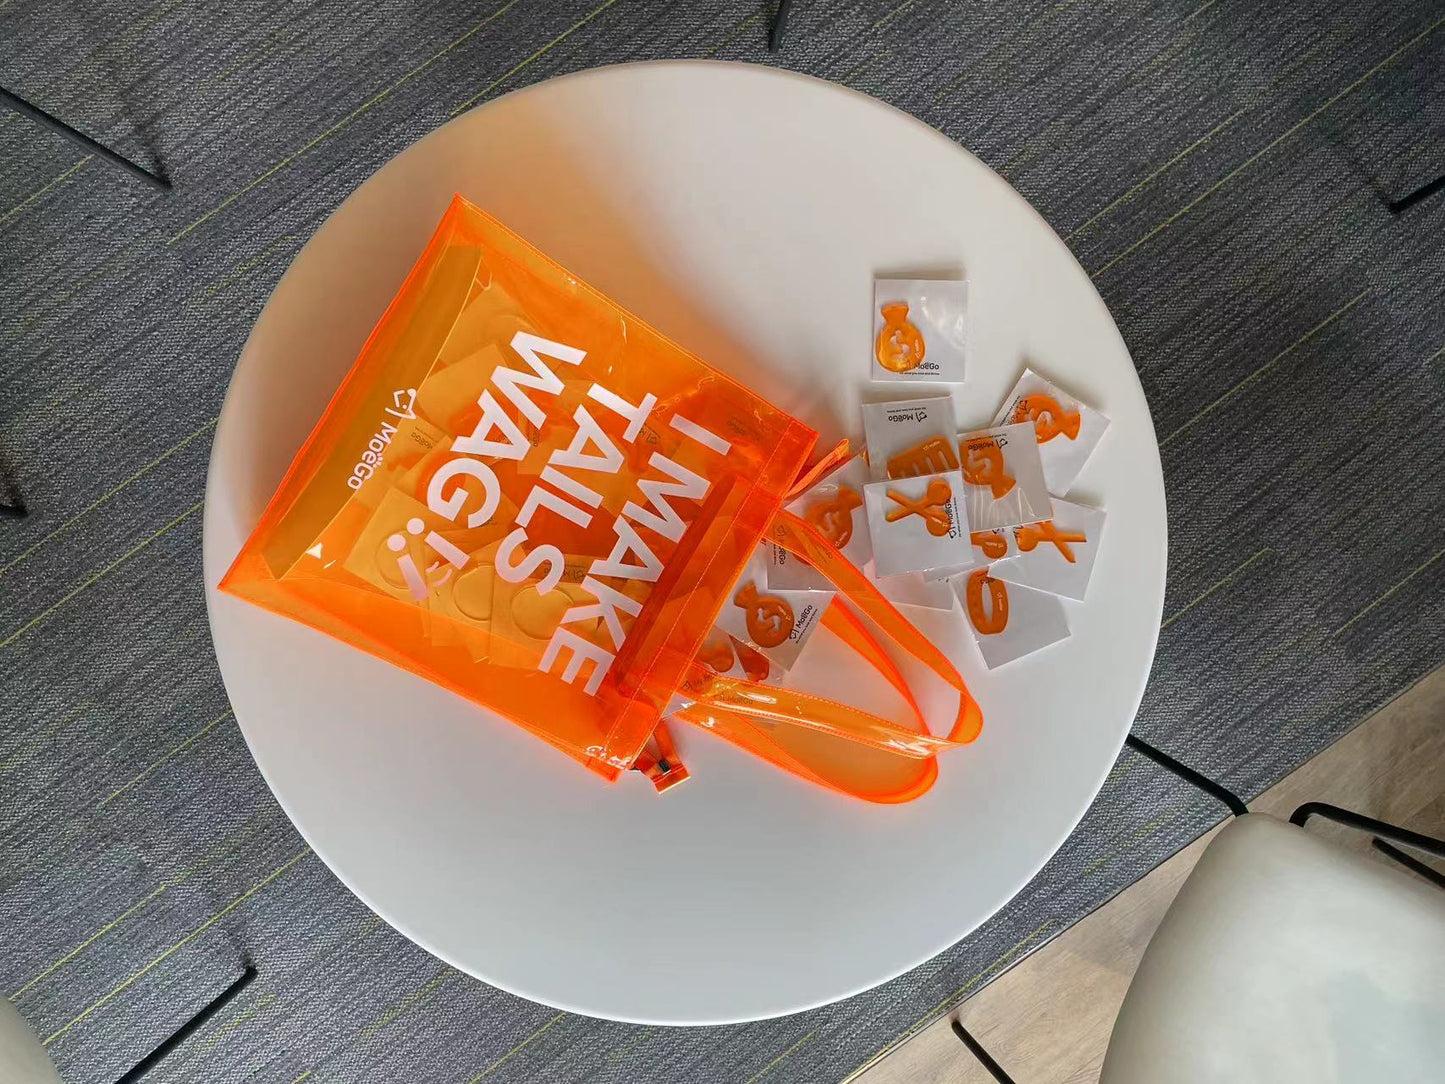 MoeGo Orange Neon PVC Tote Bag